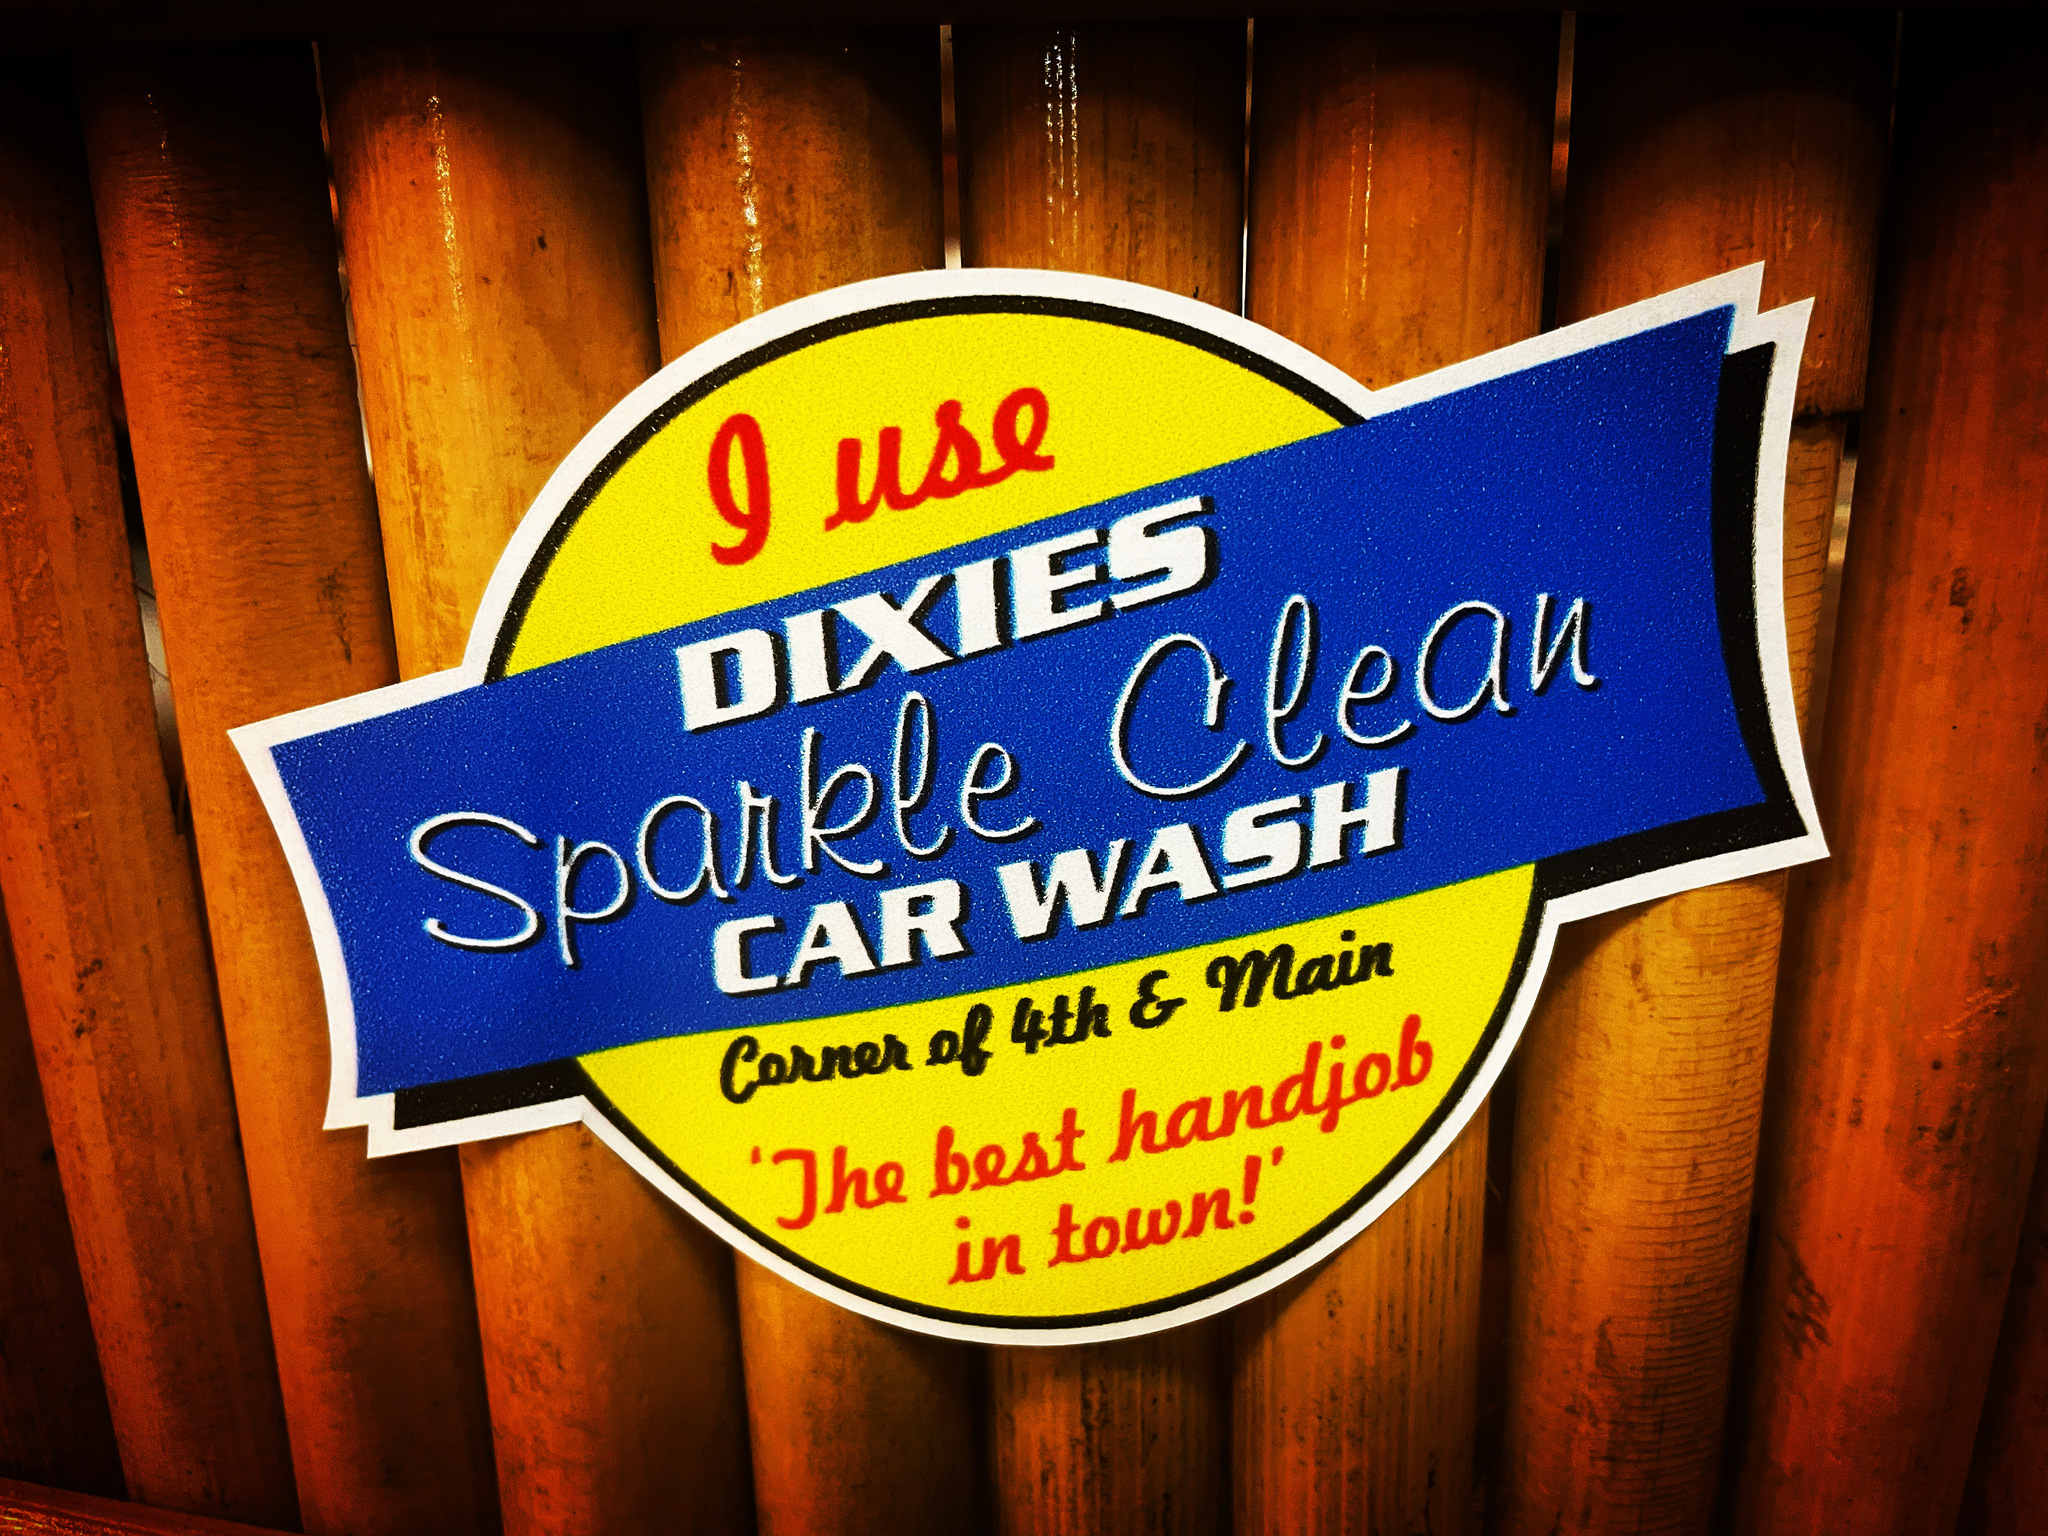 Dixies car wash "Best handjob" Dekal